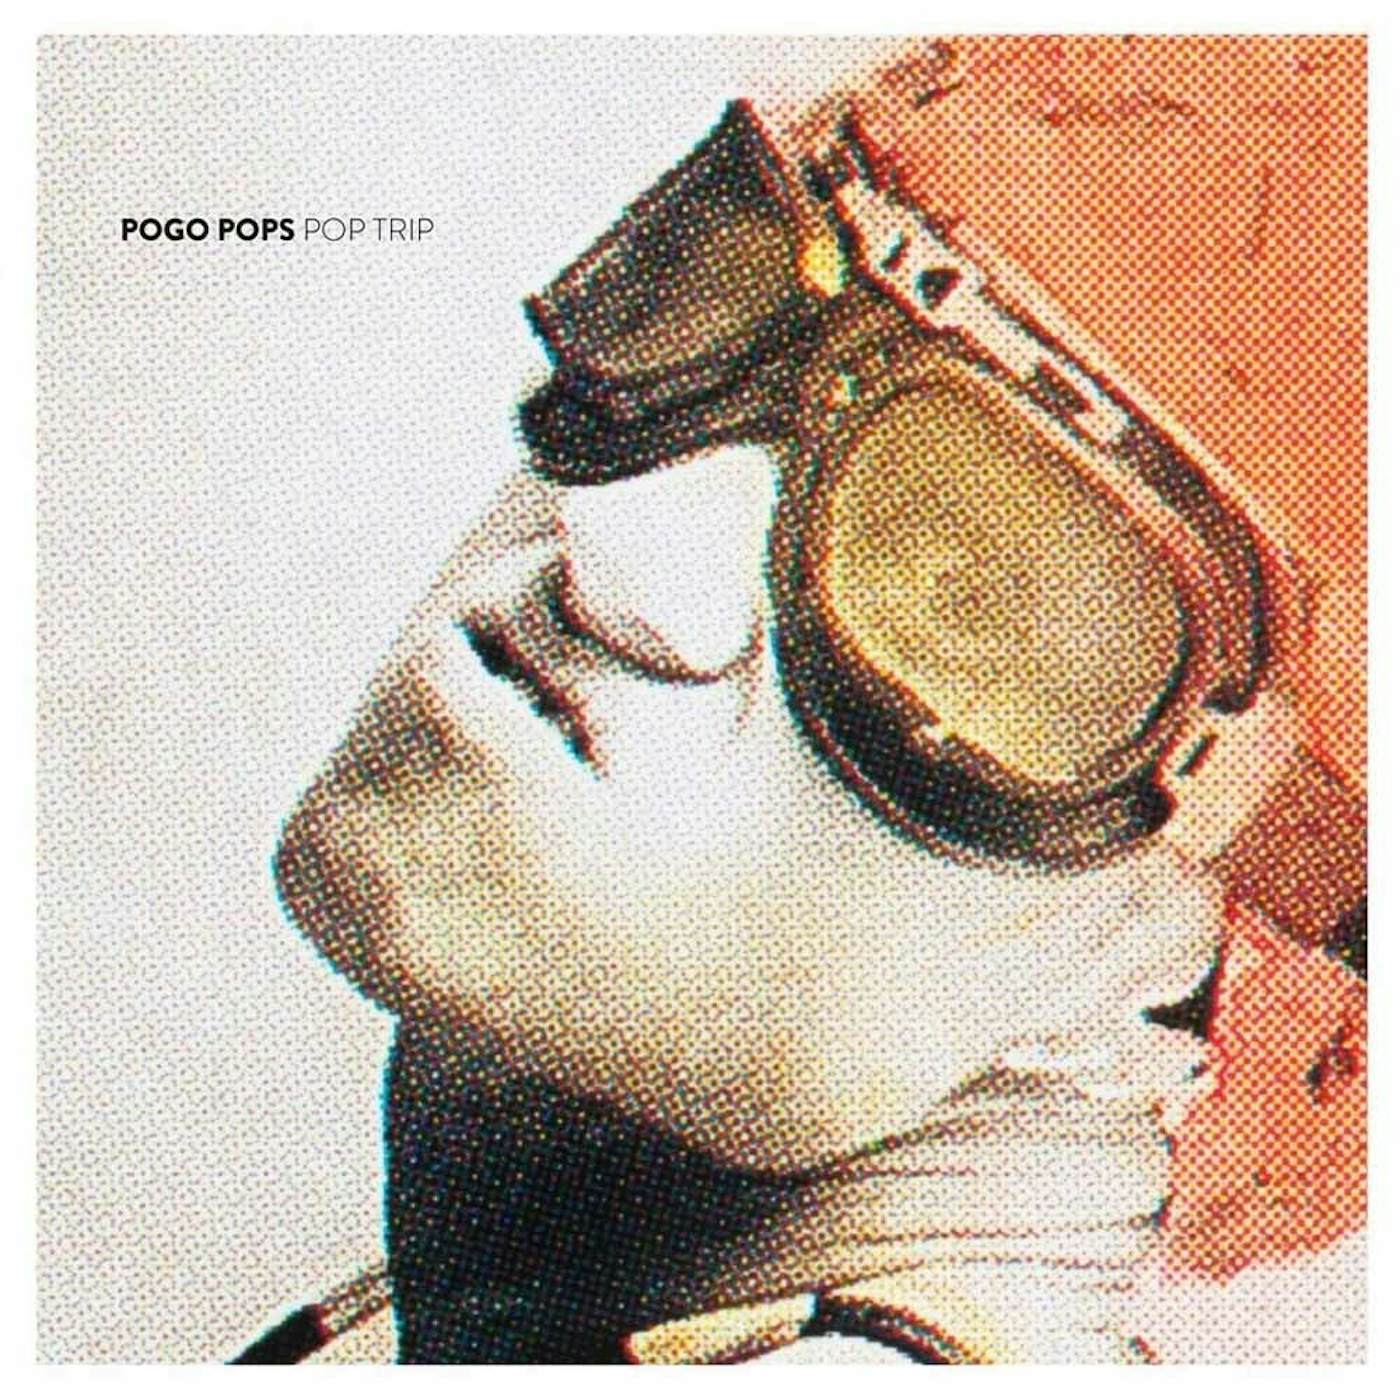 Pogo Pops LP - Pop Trip (+Cd)